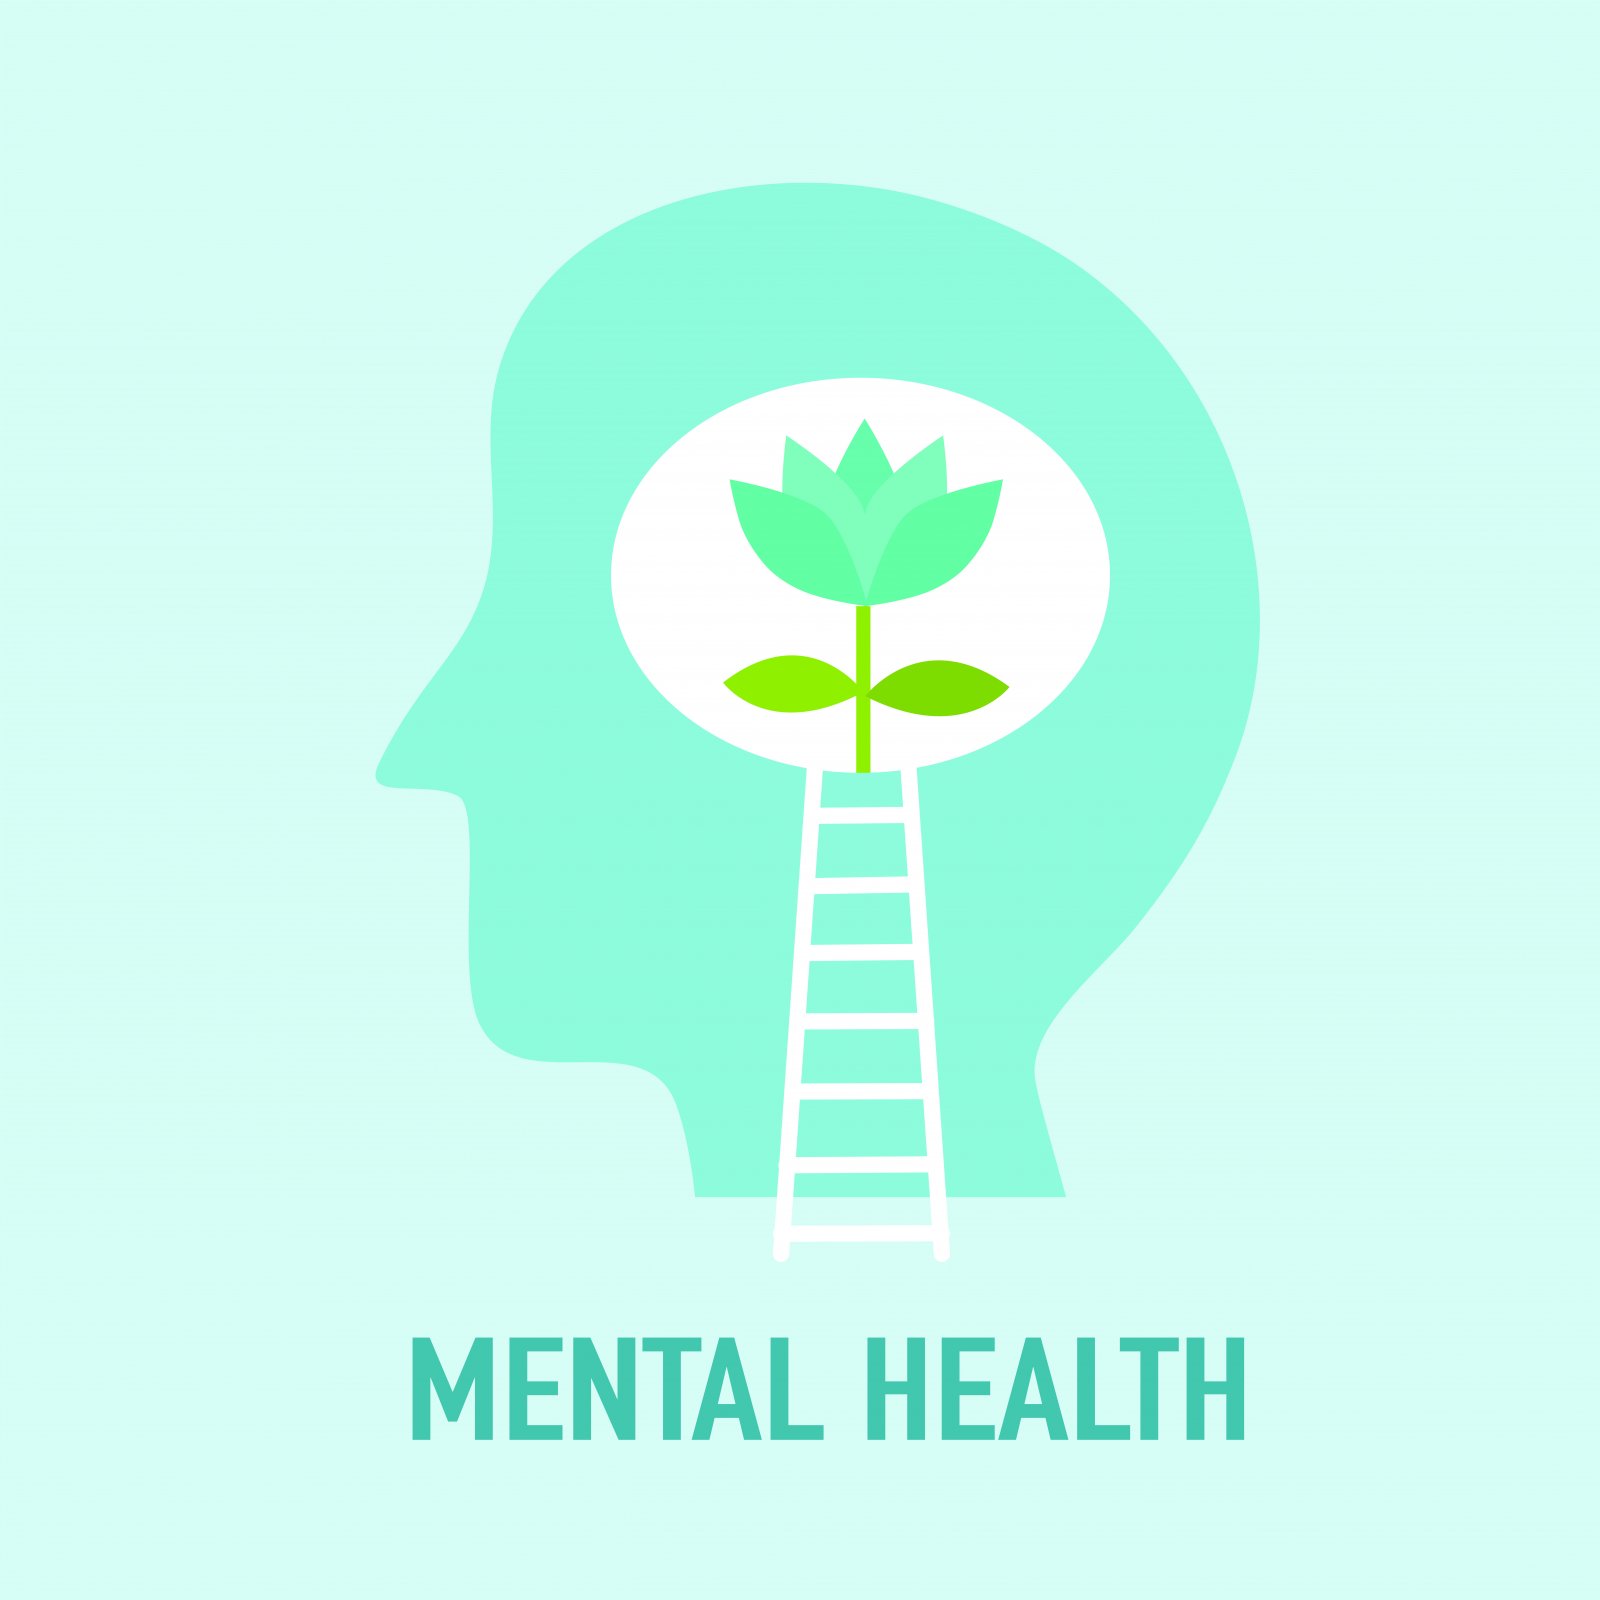 Image for Mental Health Week Set for March 29-April 2